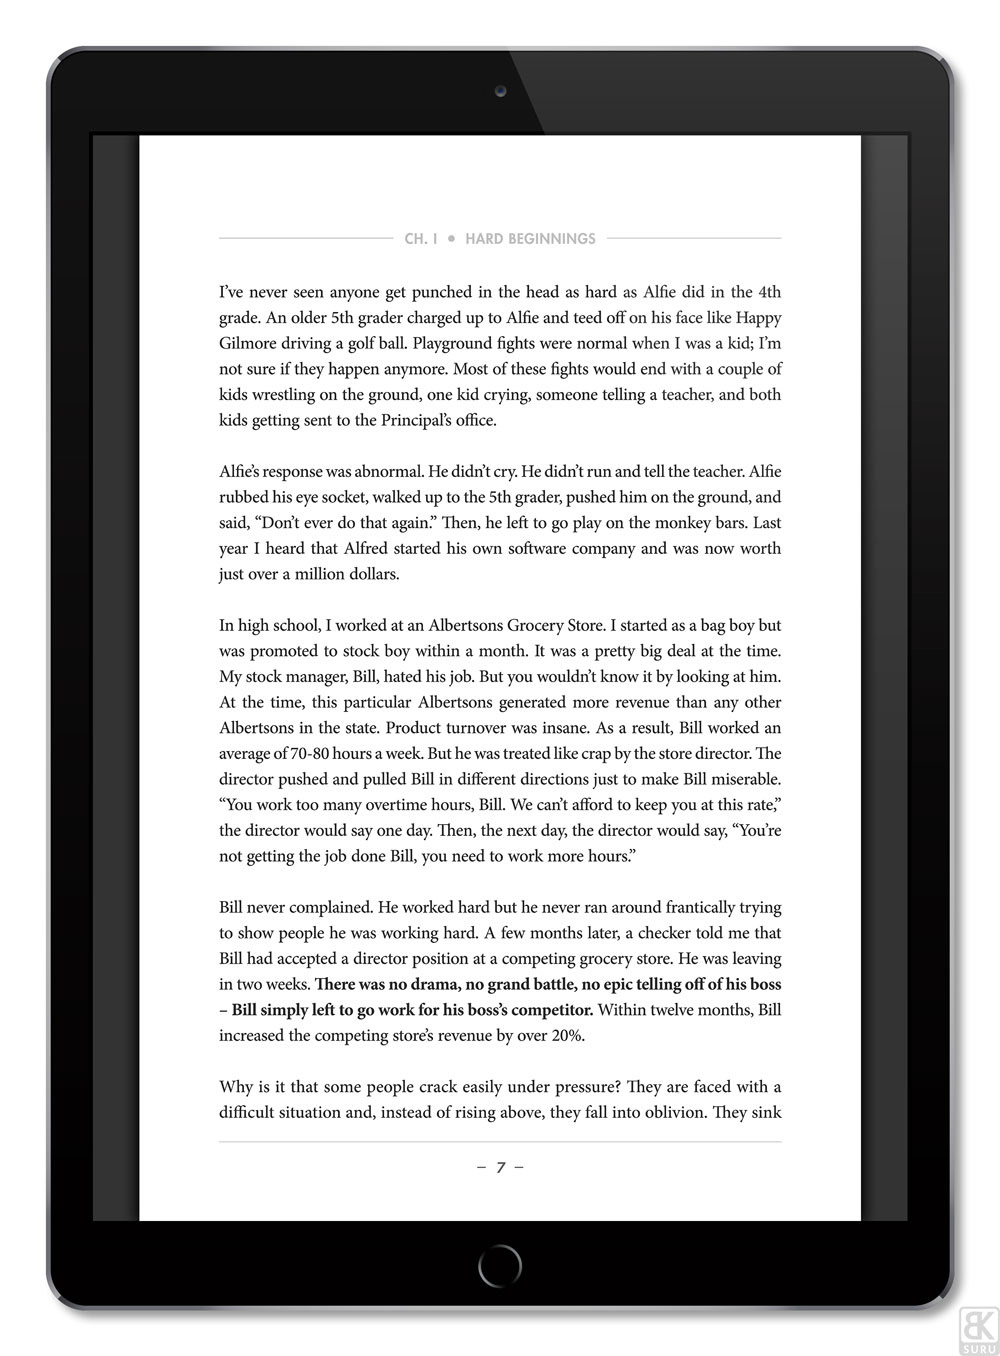 ebook cover design eBook design ebook designer editorial design  formatting and layout illustration design Image sourcing infographic design publication design typography  